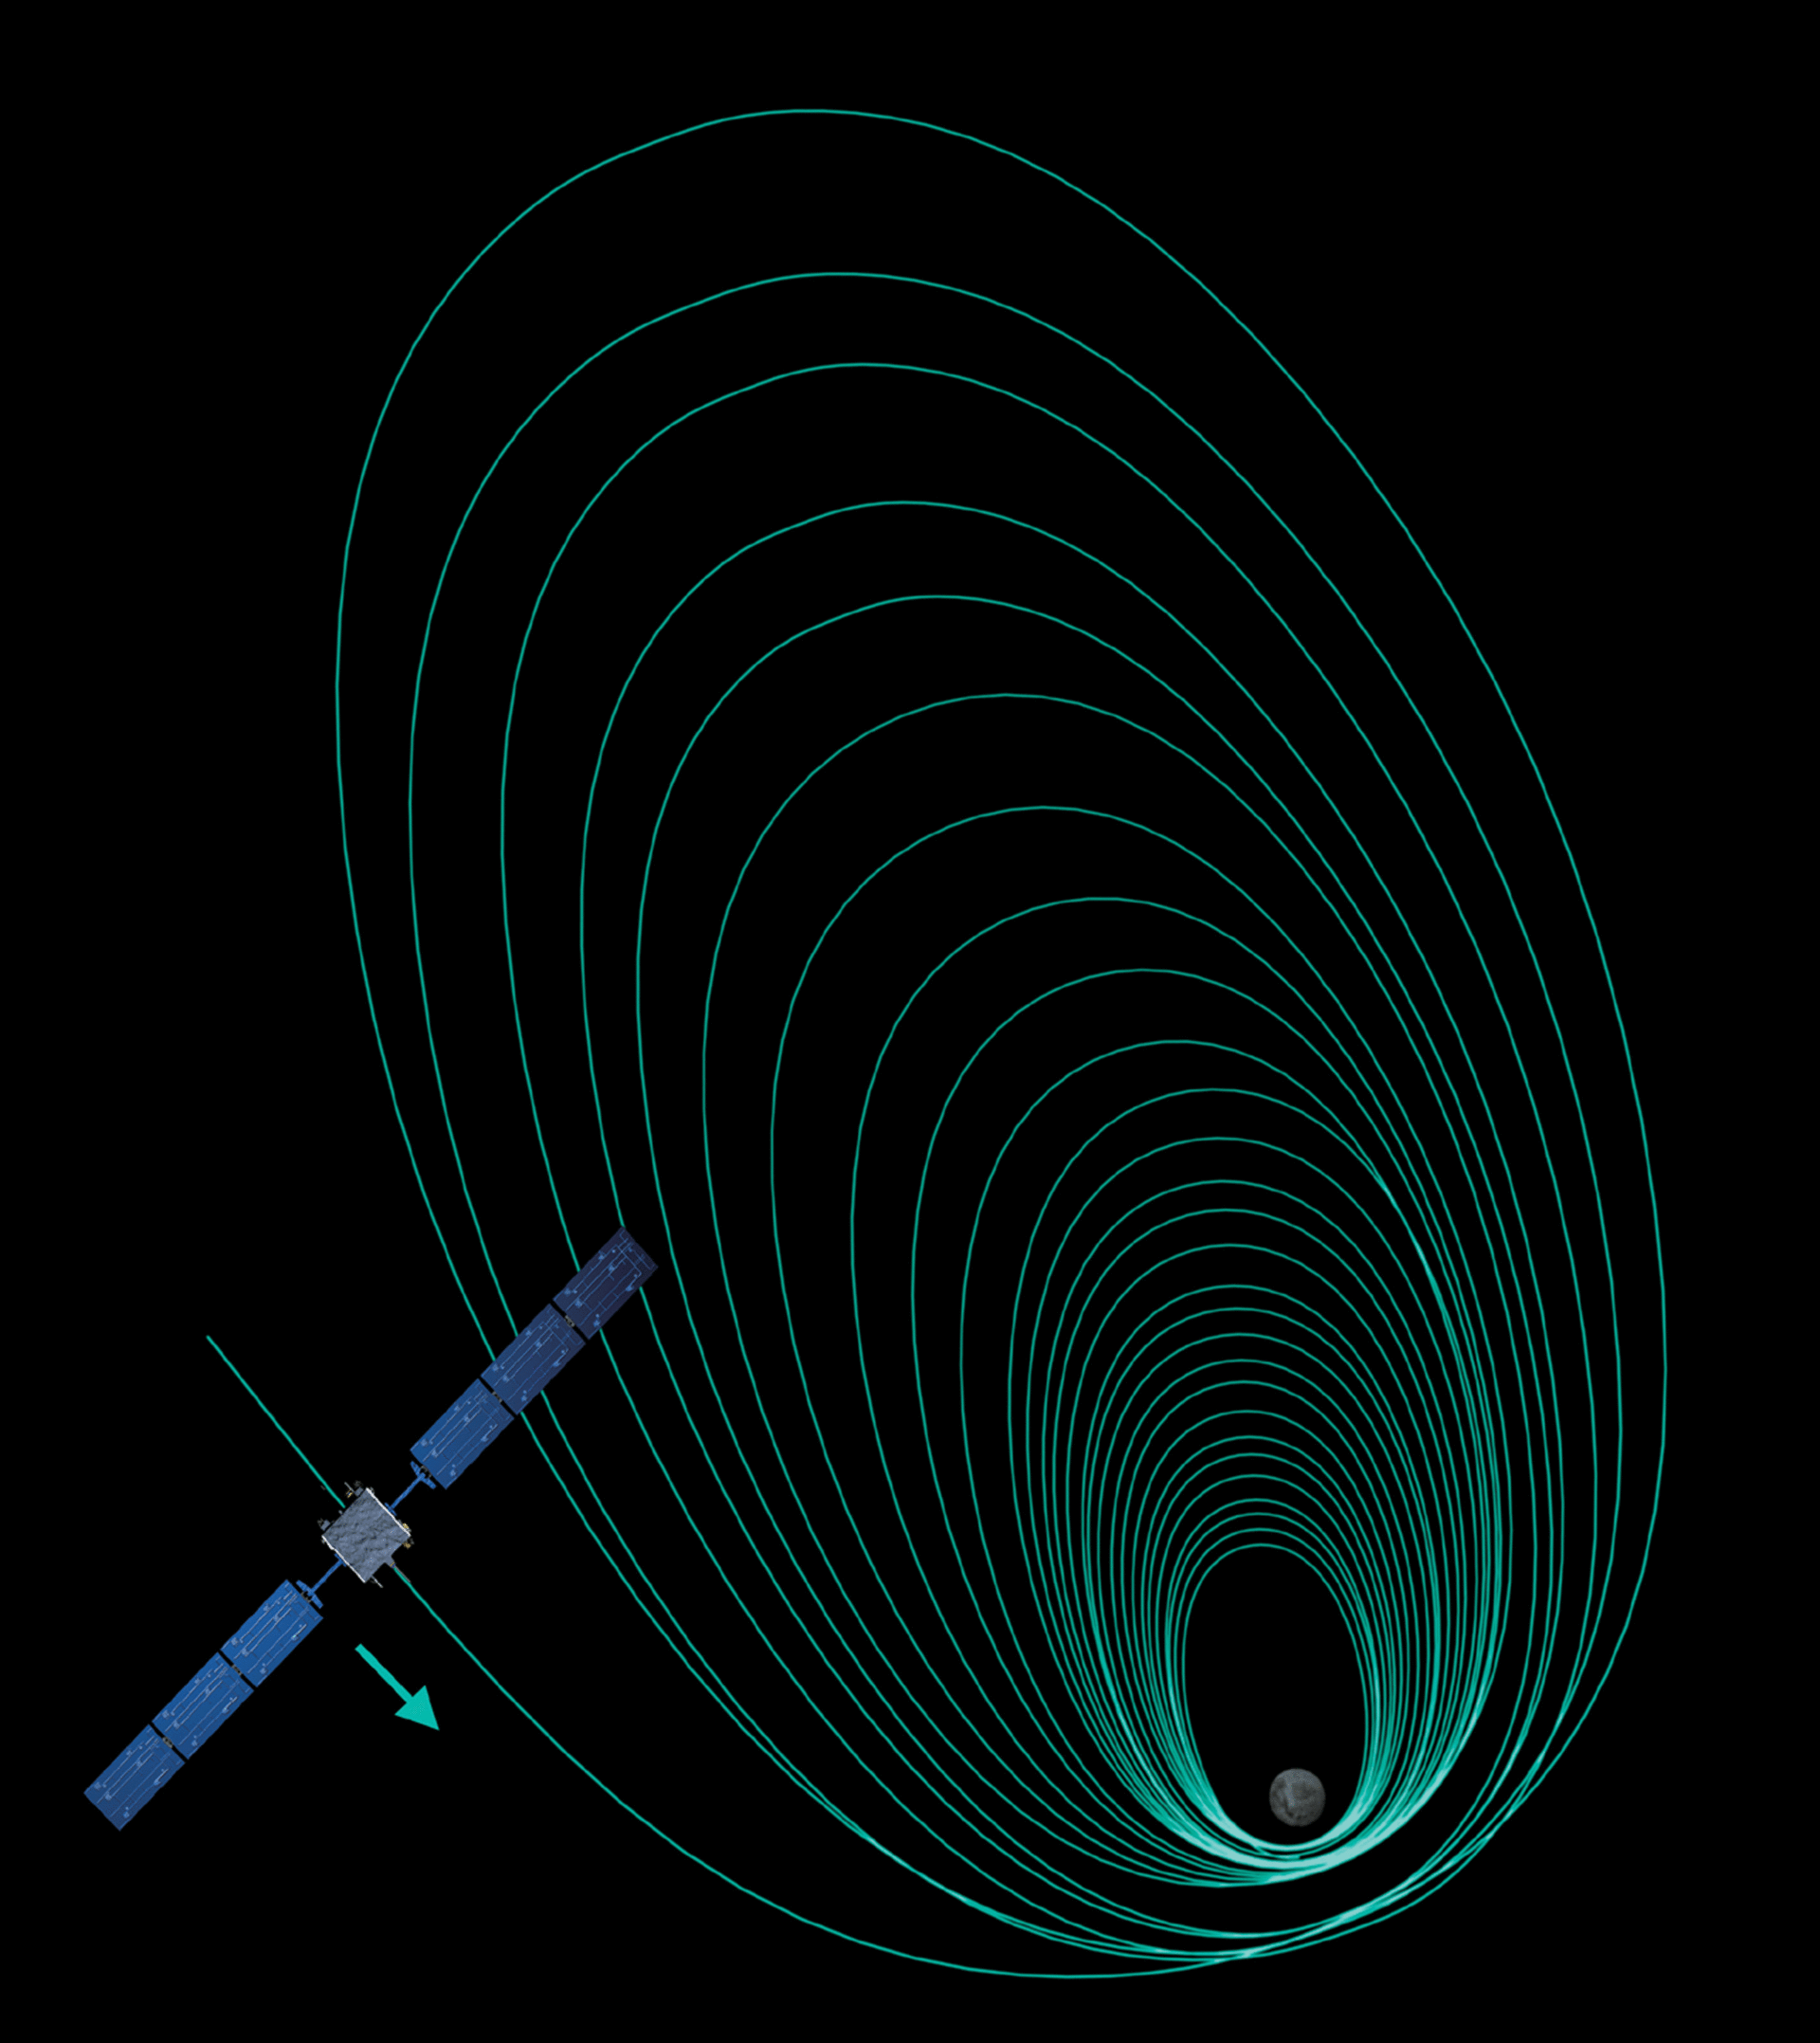 earth spiral orbit